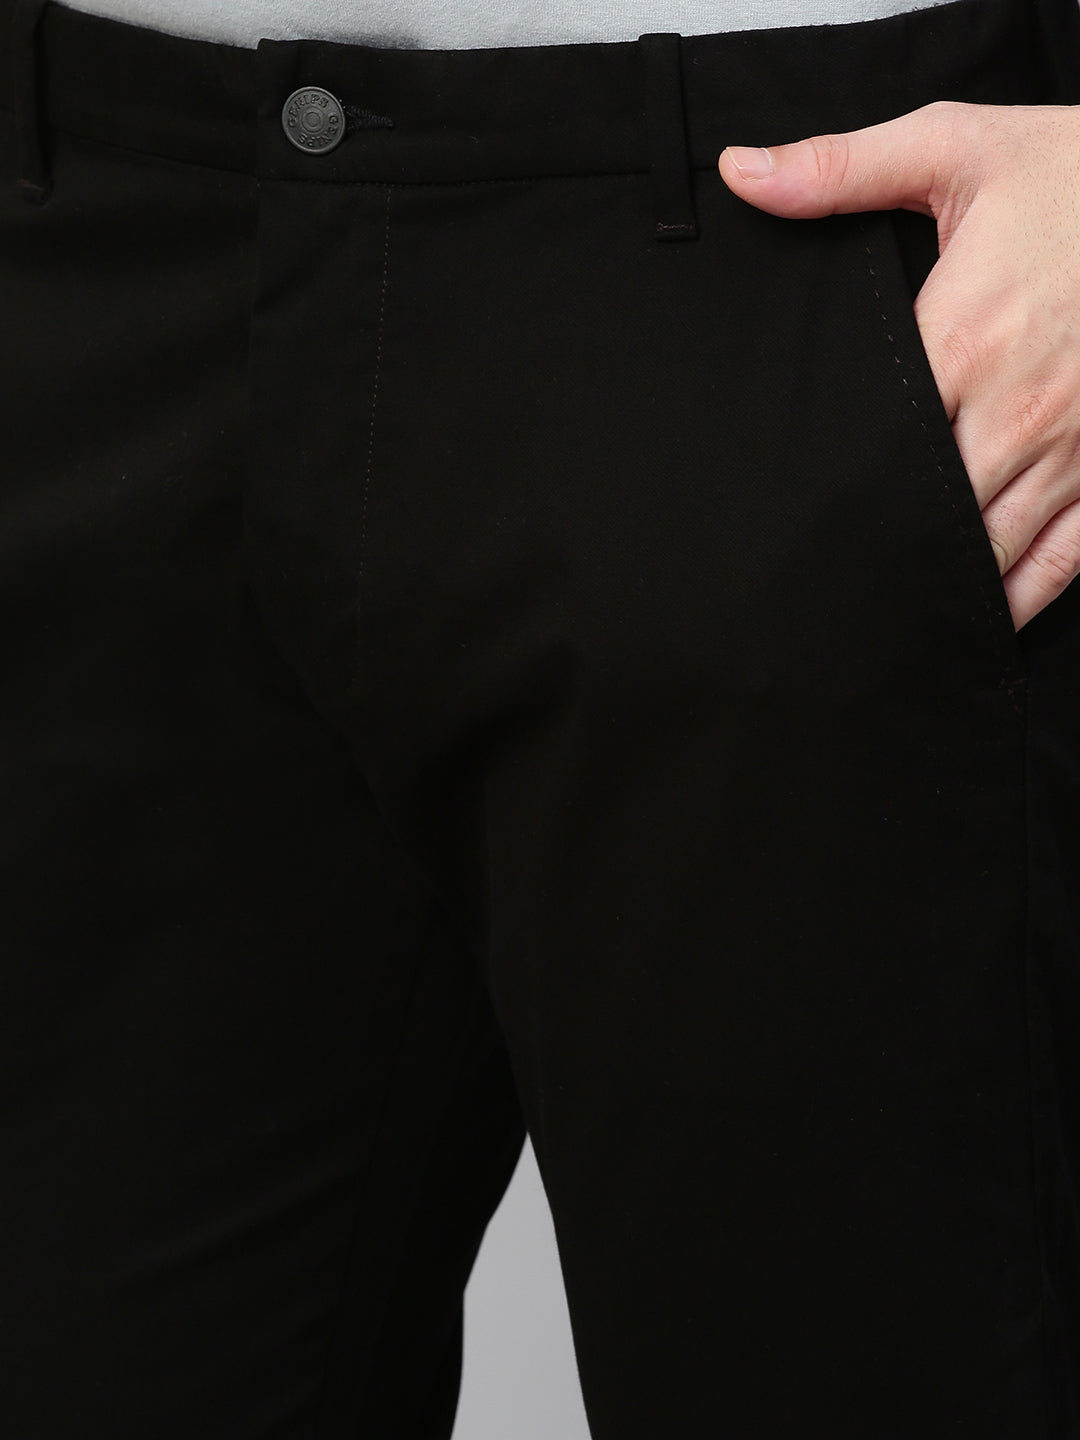 Genips Men's Black Cotton Stretch Caribbean Slim Fit Solid Trousers